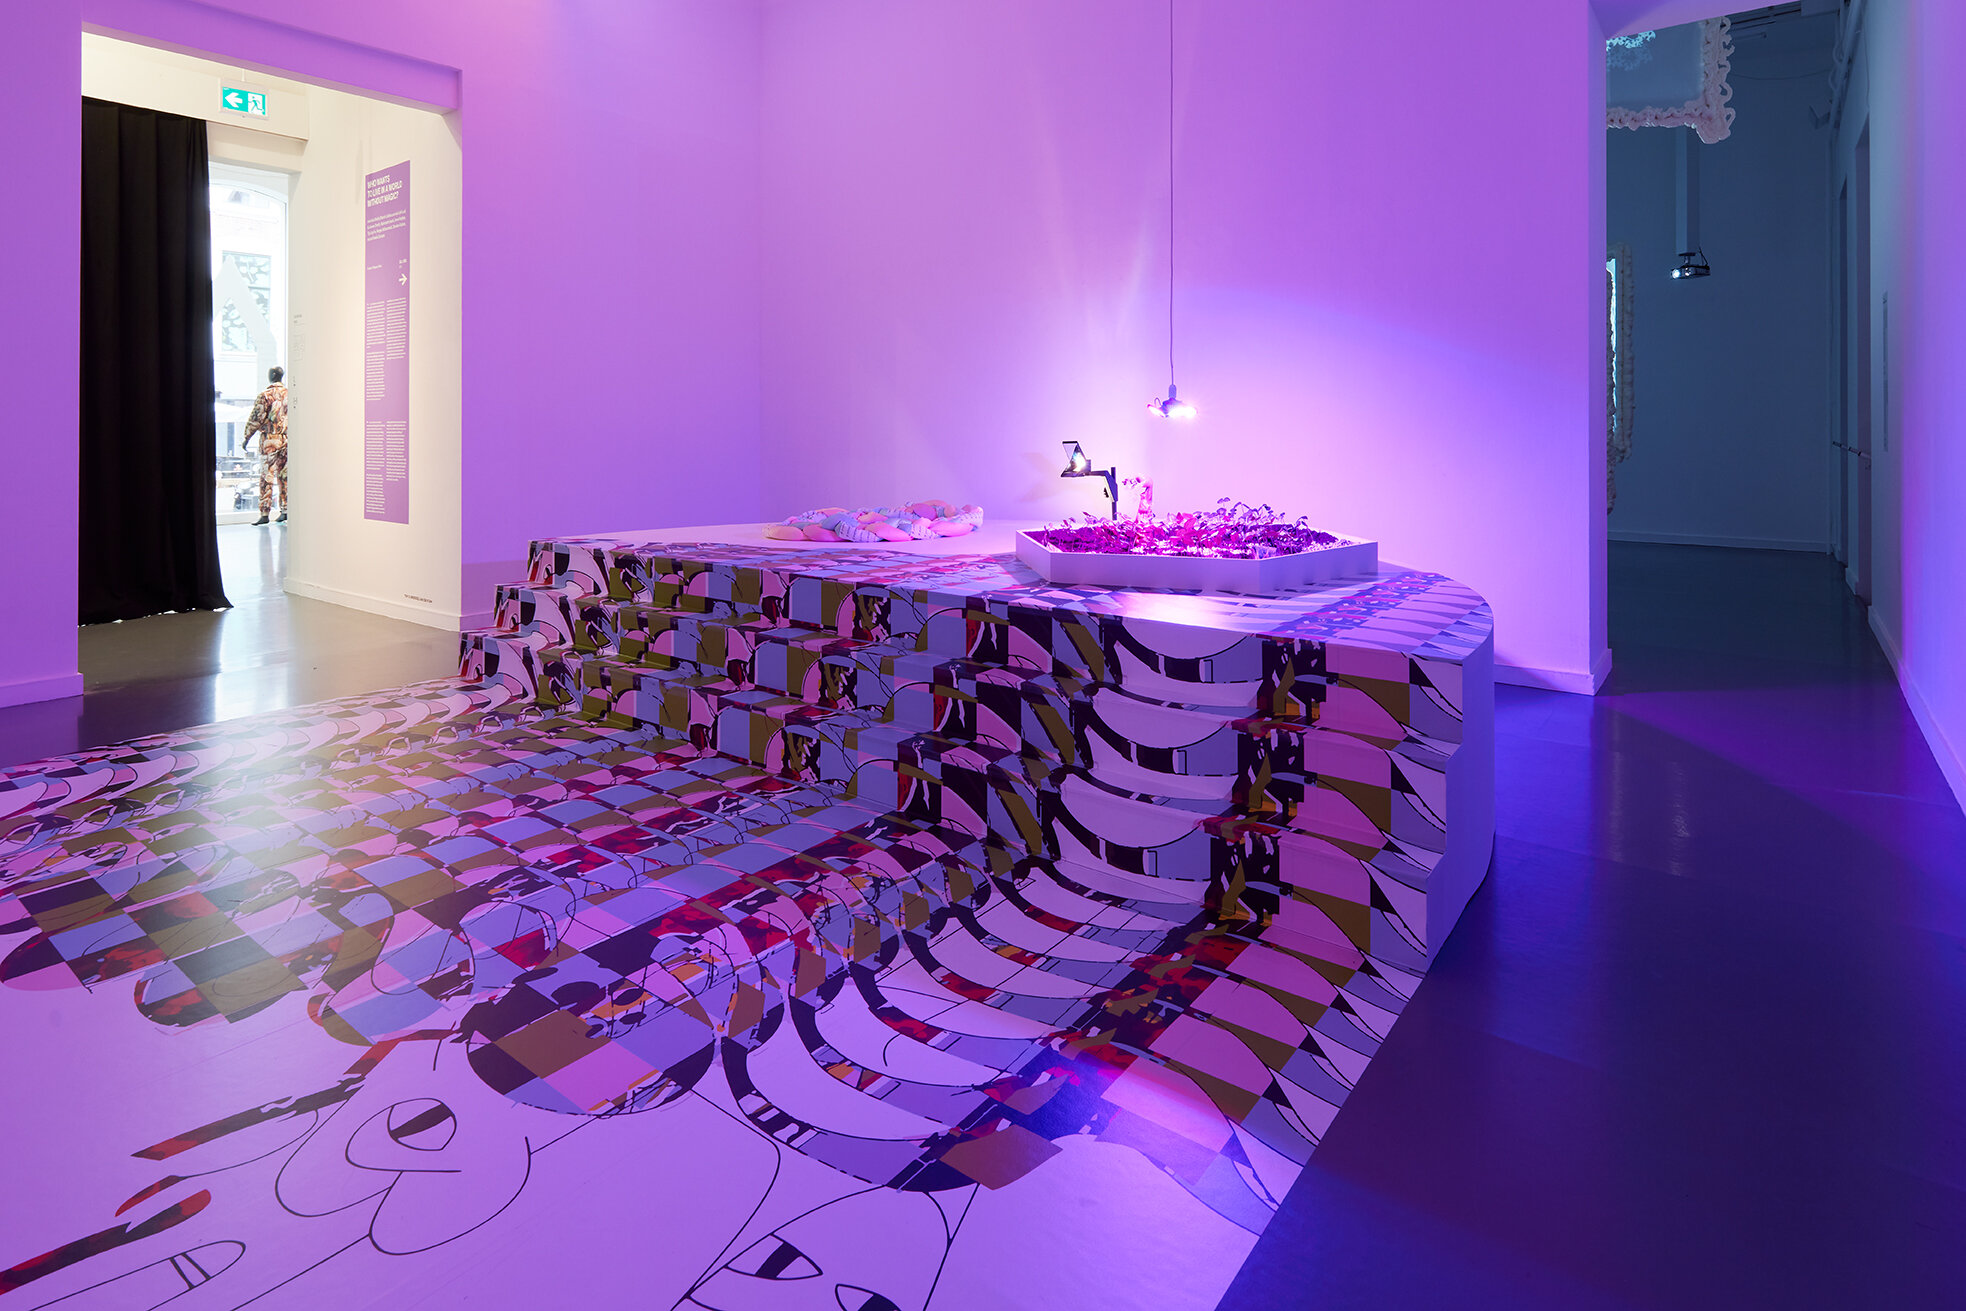  photos by: Aad Hoogendoorn @ Tent Rotterdam     Concept and installation  |  Mehraneh Atashi  Spatial design development &amp; fabrication plan  |  Szu-Yi Wang  Produciton team  |  TENT Rotterdam 